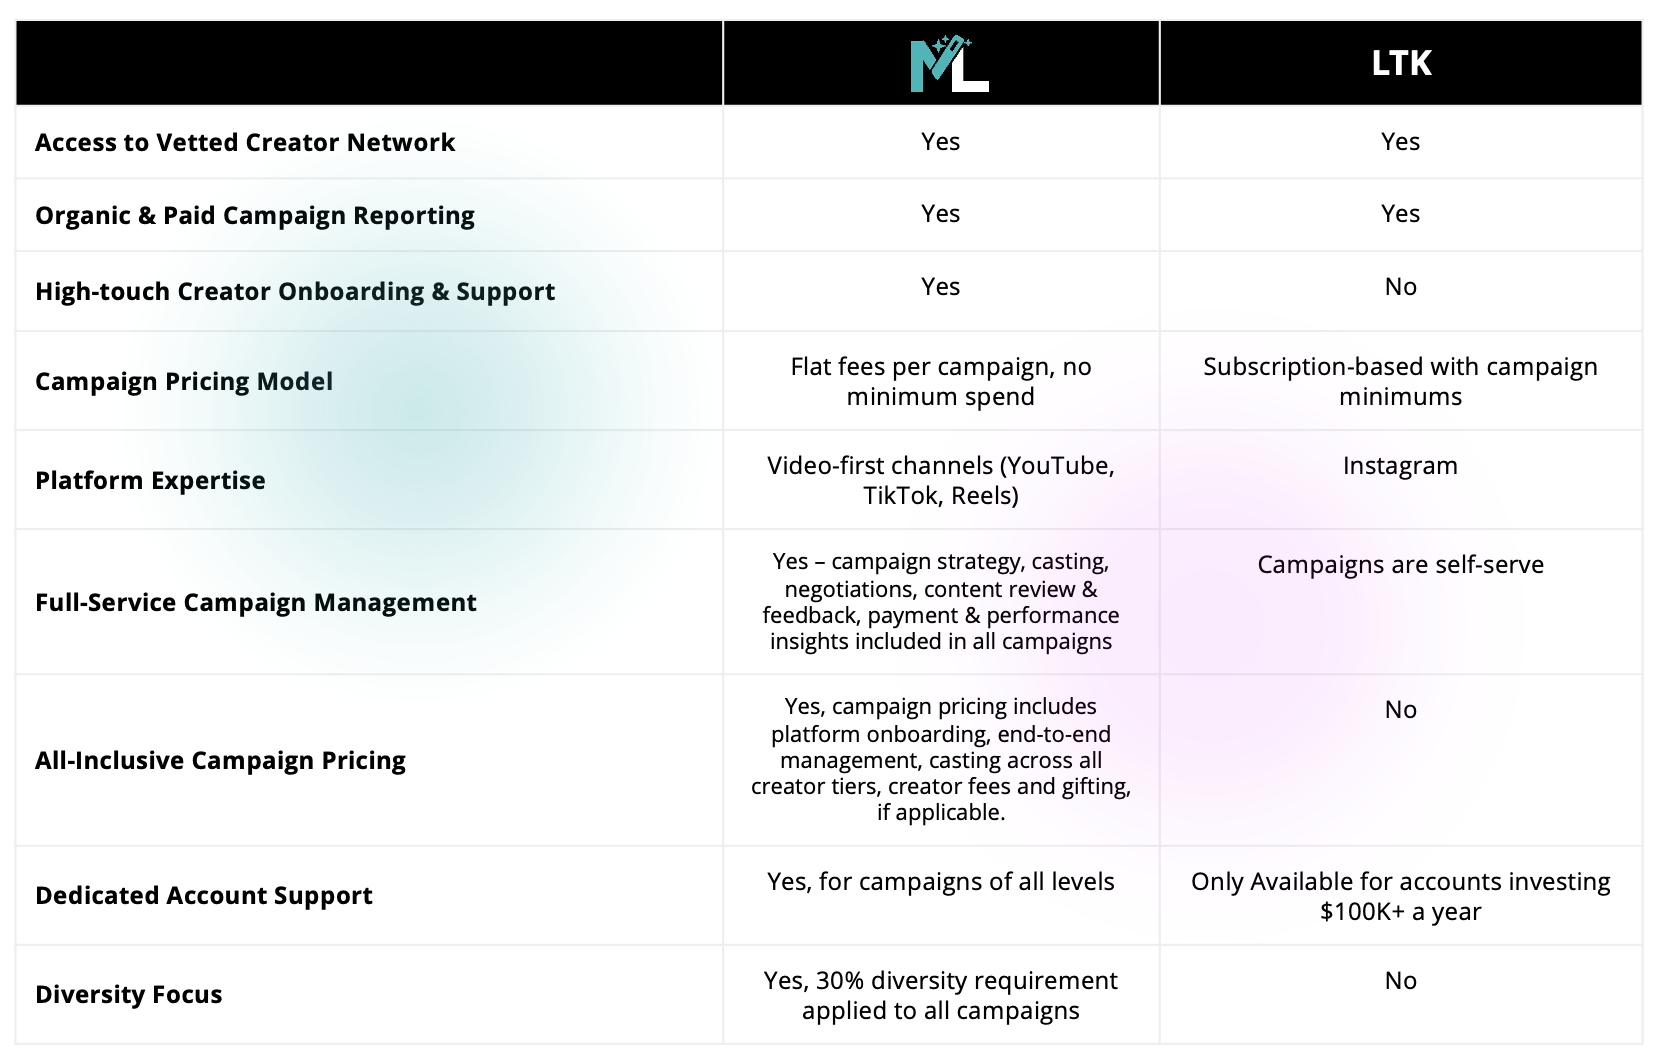 Comparing Influencer Marketing Platforms: MagicLinks vs LTK